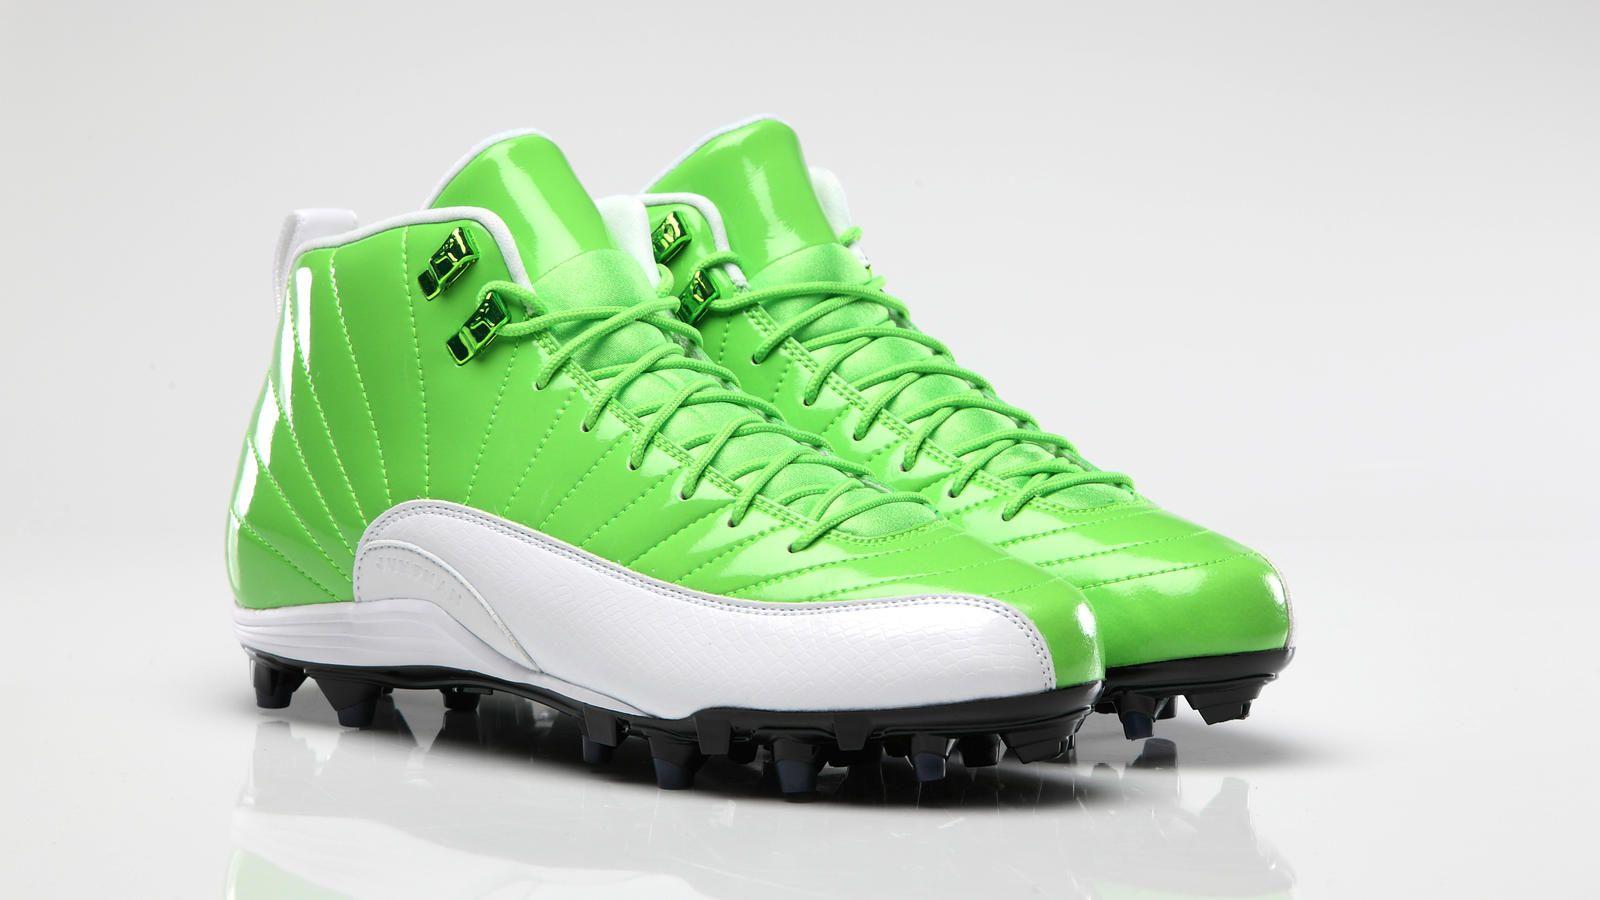 Lime Green Jordan Logo - Jordan Brand Football Athletes to Wear Air Jordan XII Cleats